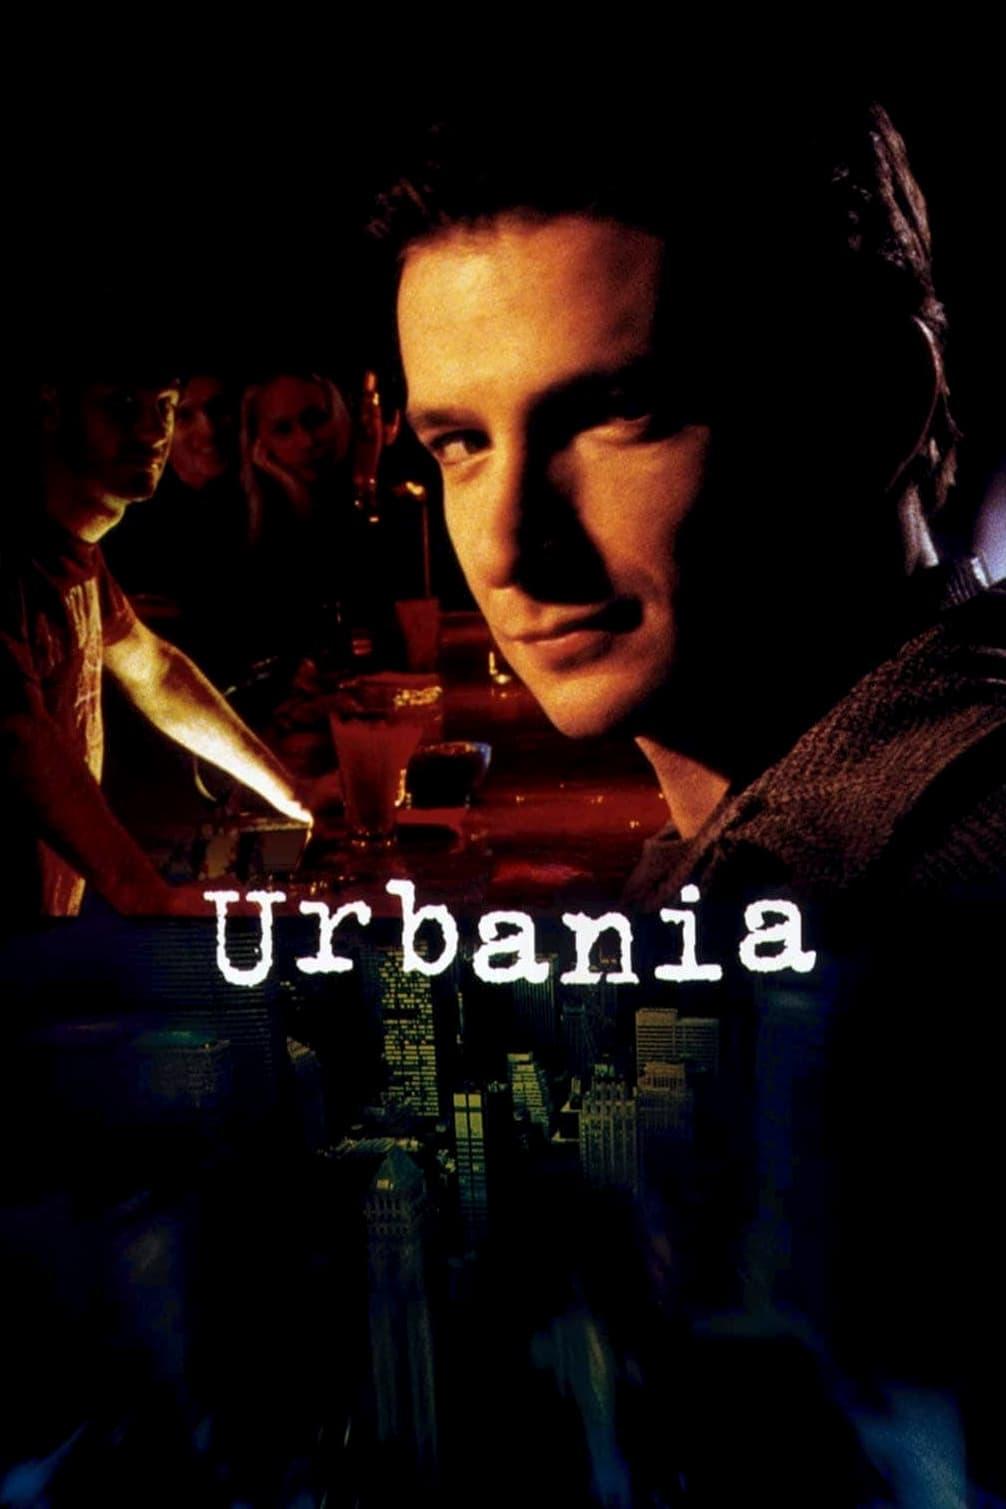 Urbania poster